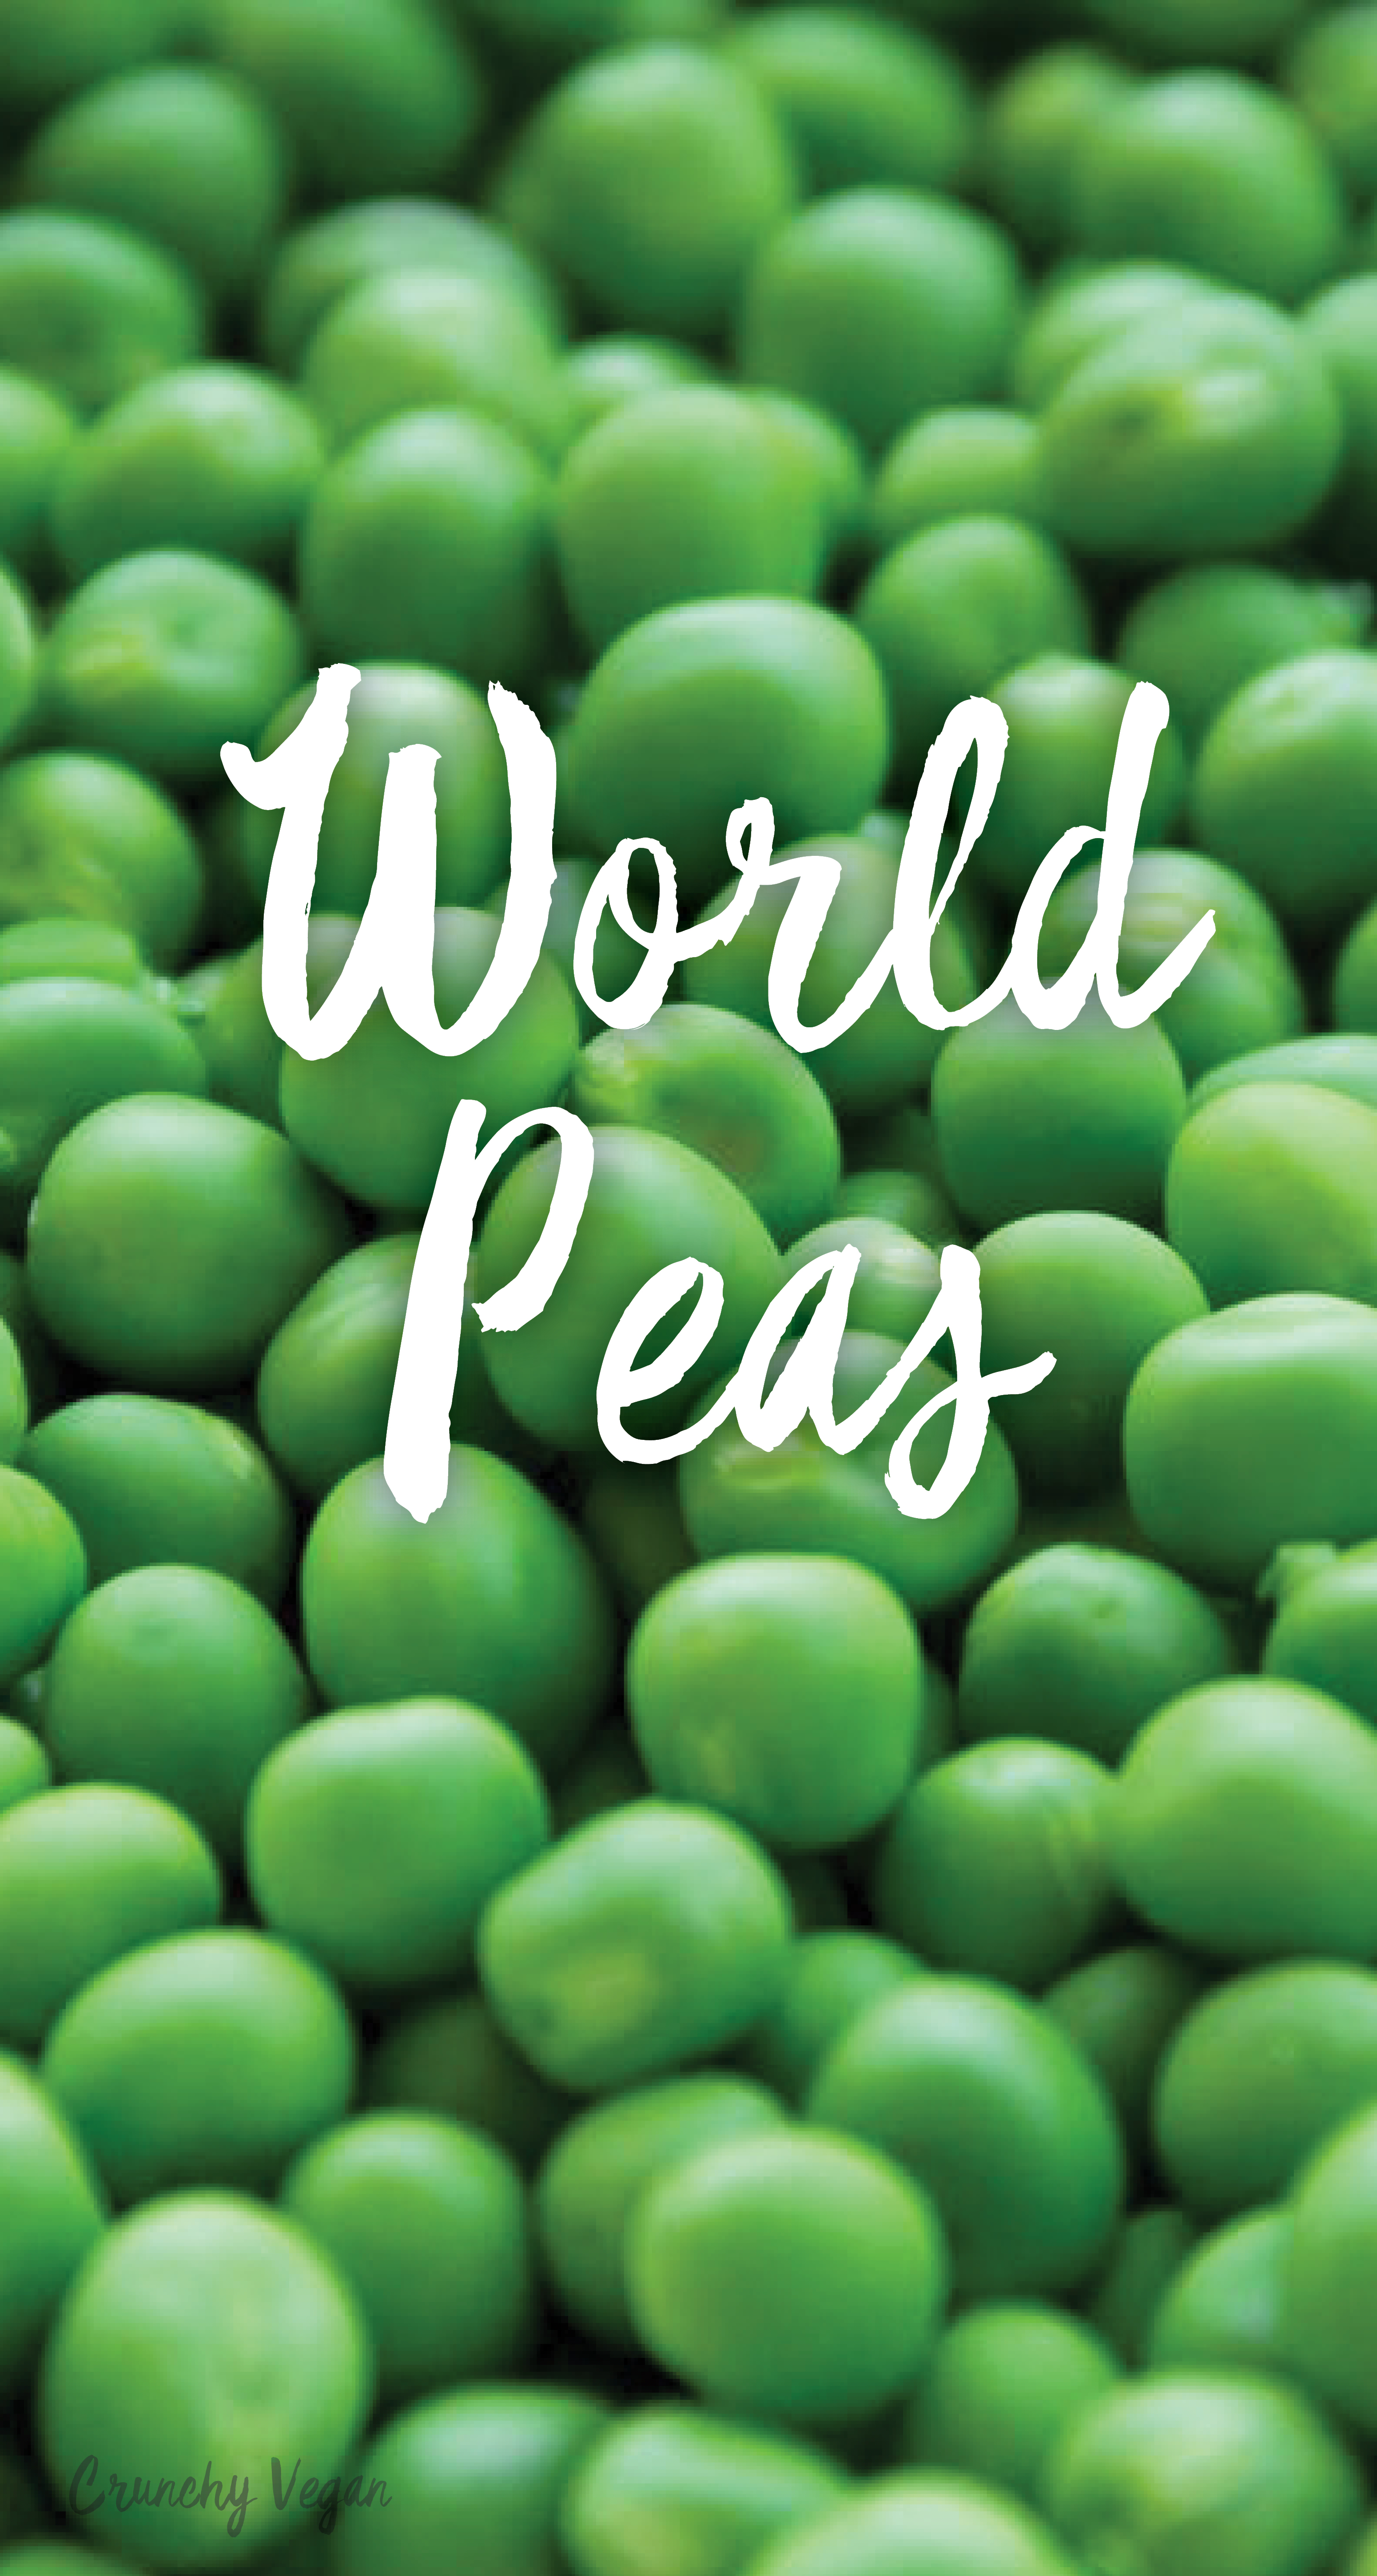 World Peas Phone Wallpaper Vegan - Food Wallpaper Hd Portrait , HD Wallpaper & Backgrounds